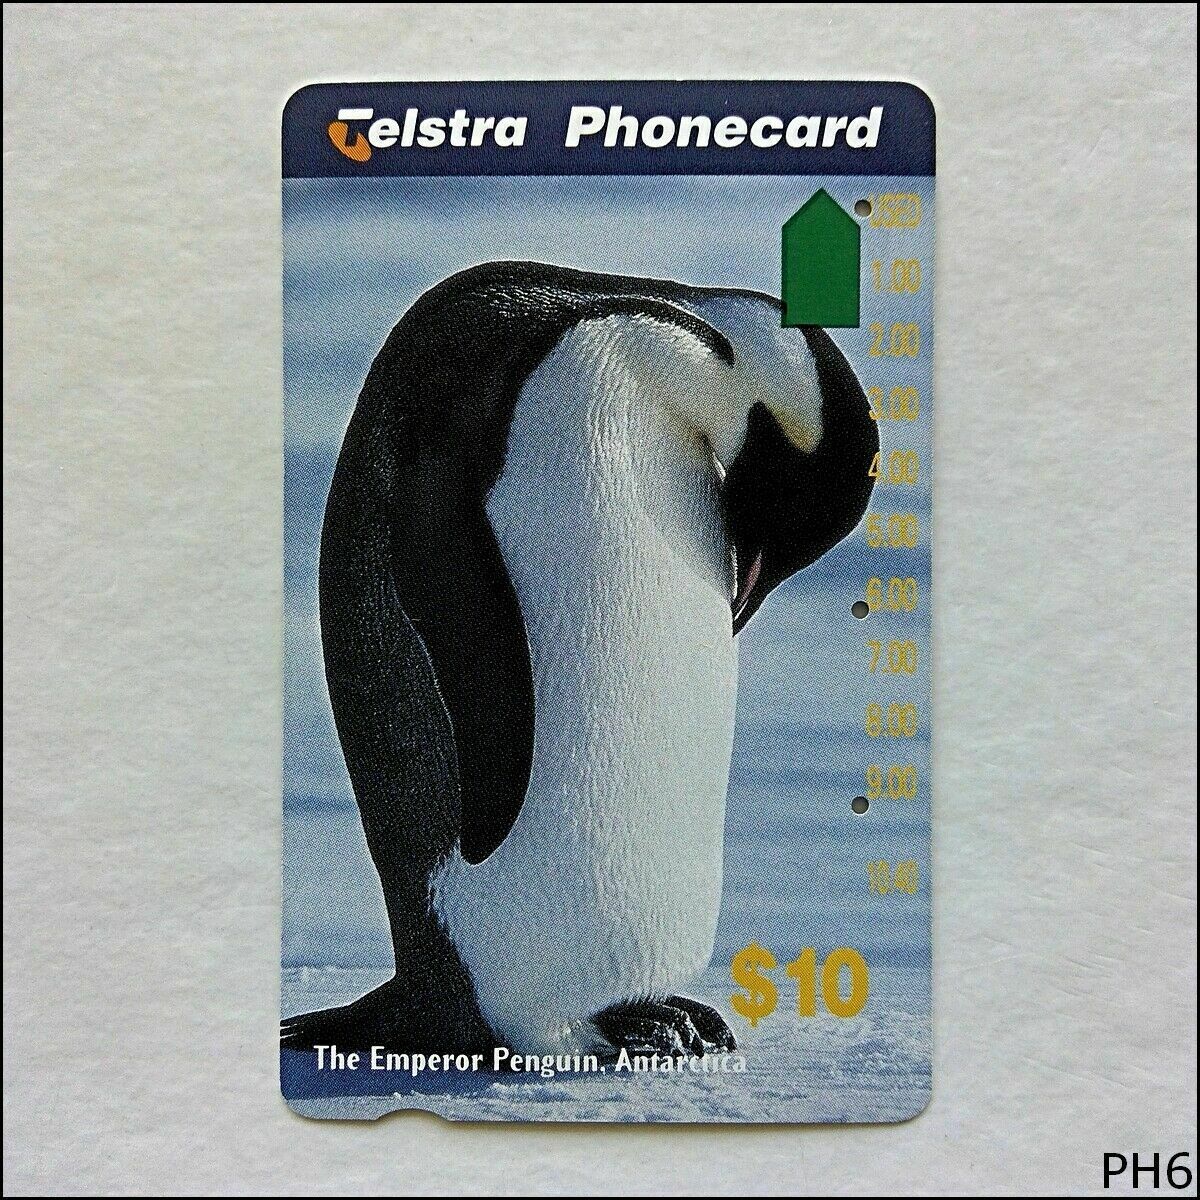 Telstra Antarctic Emperor Penguin N962623a 1177 $10 Phonecard (PH6)